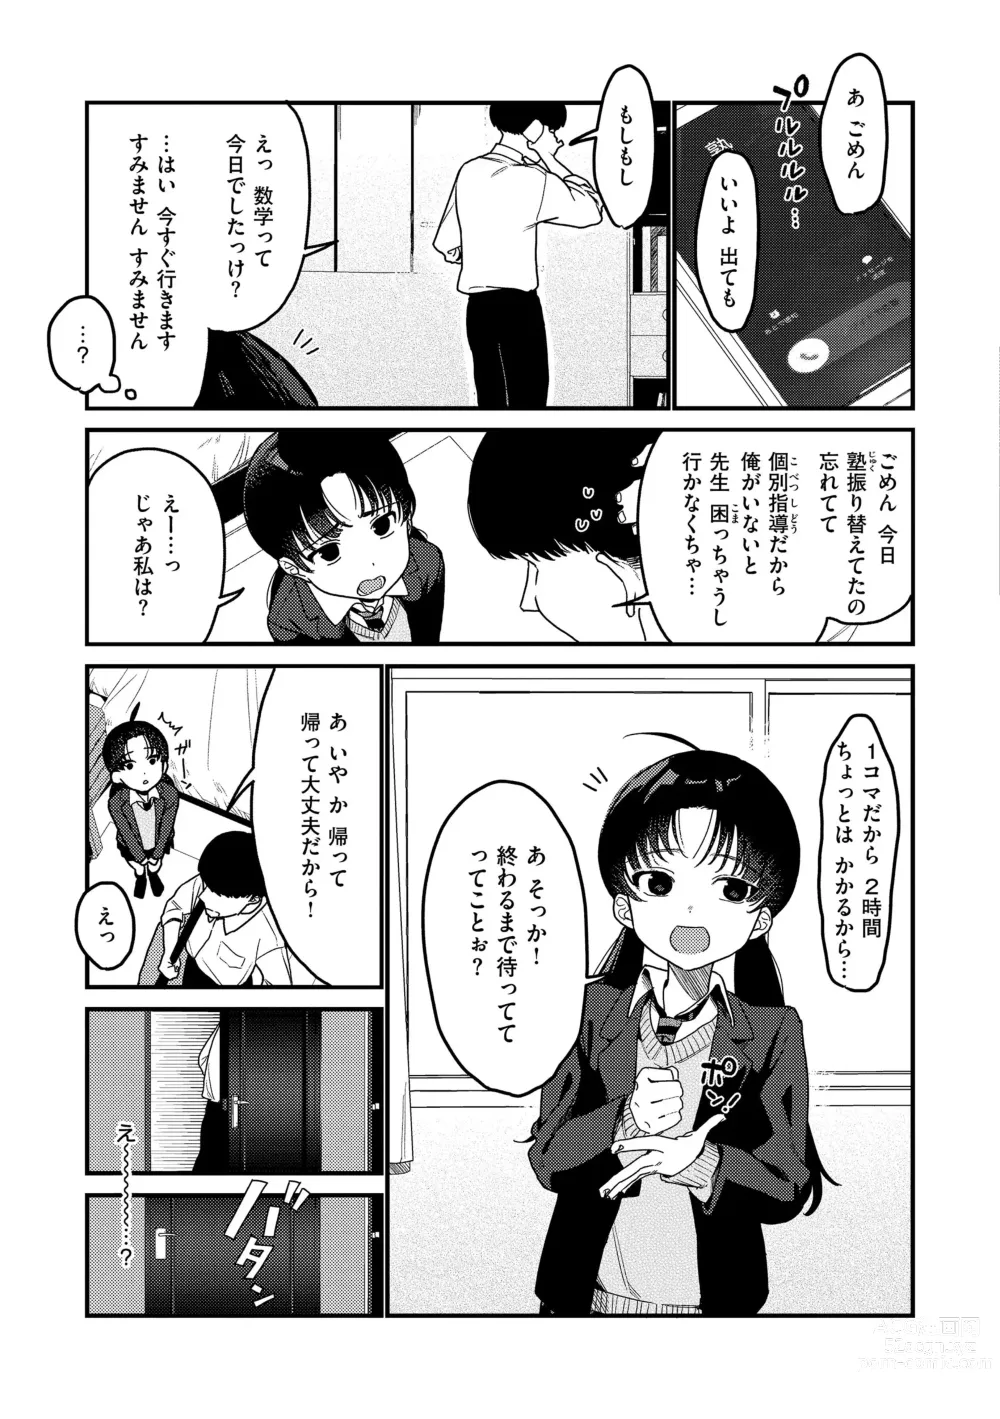 Page 7 of manga Wakarasete. - Show me reality.